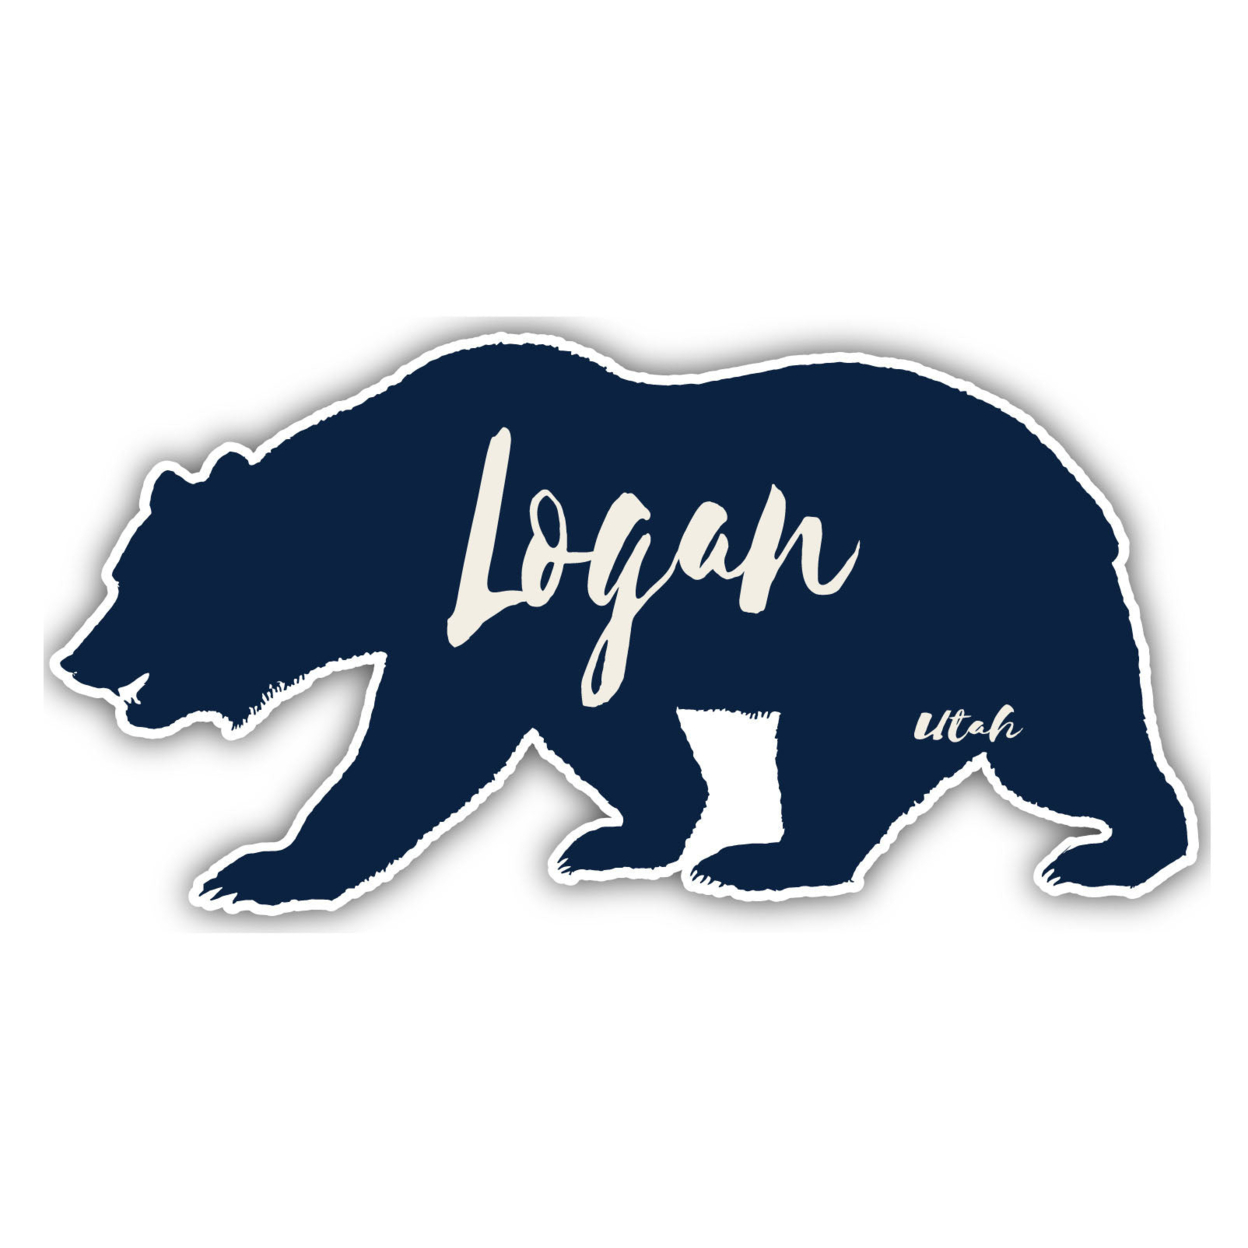 Logan Utah Souvenir Decorative Stickers (Choose Theme And Size) - 2-Inch, Bear